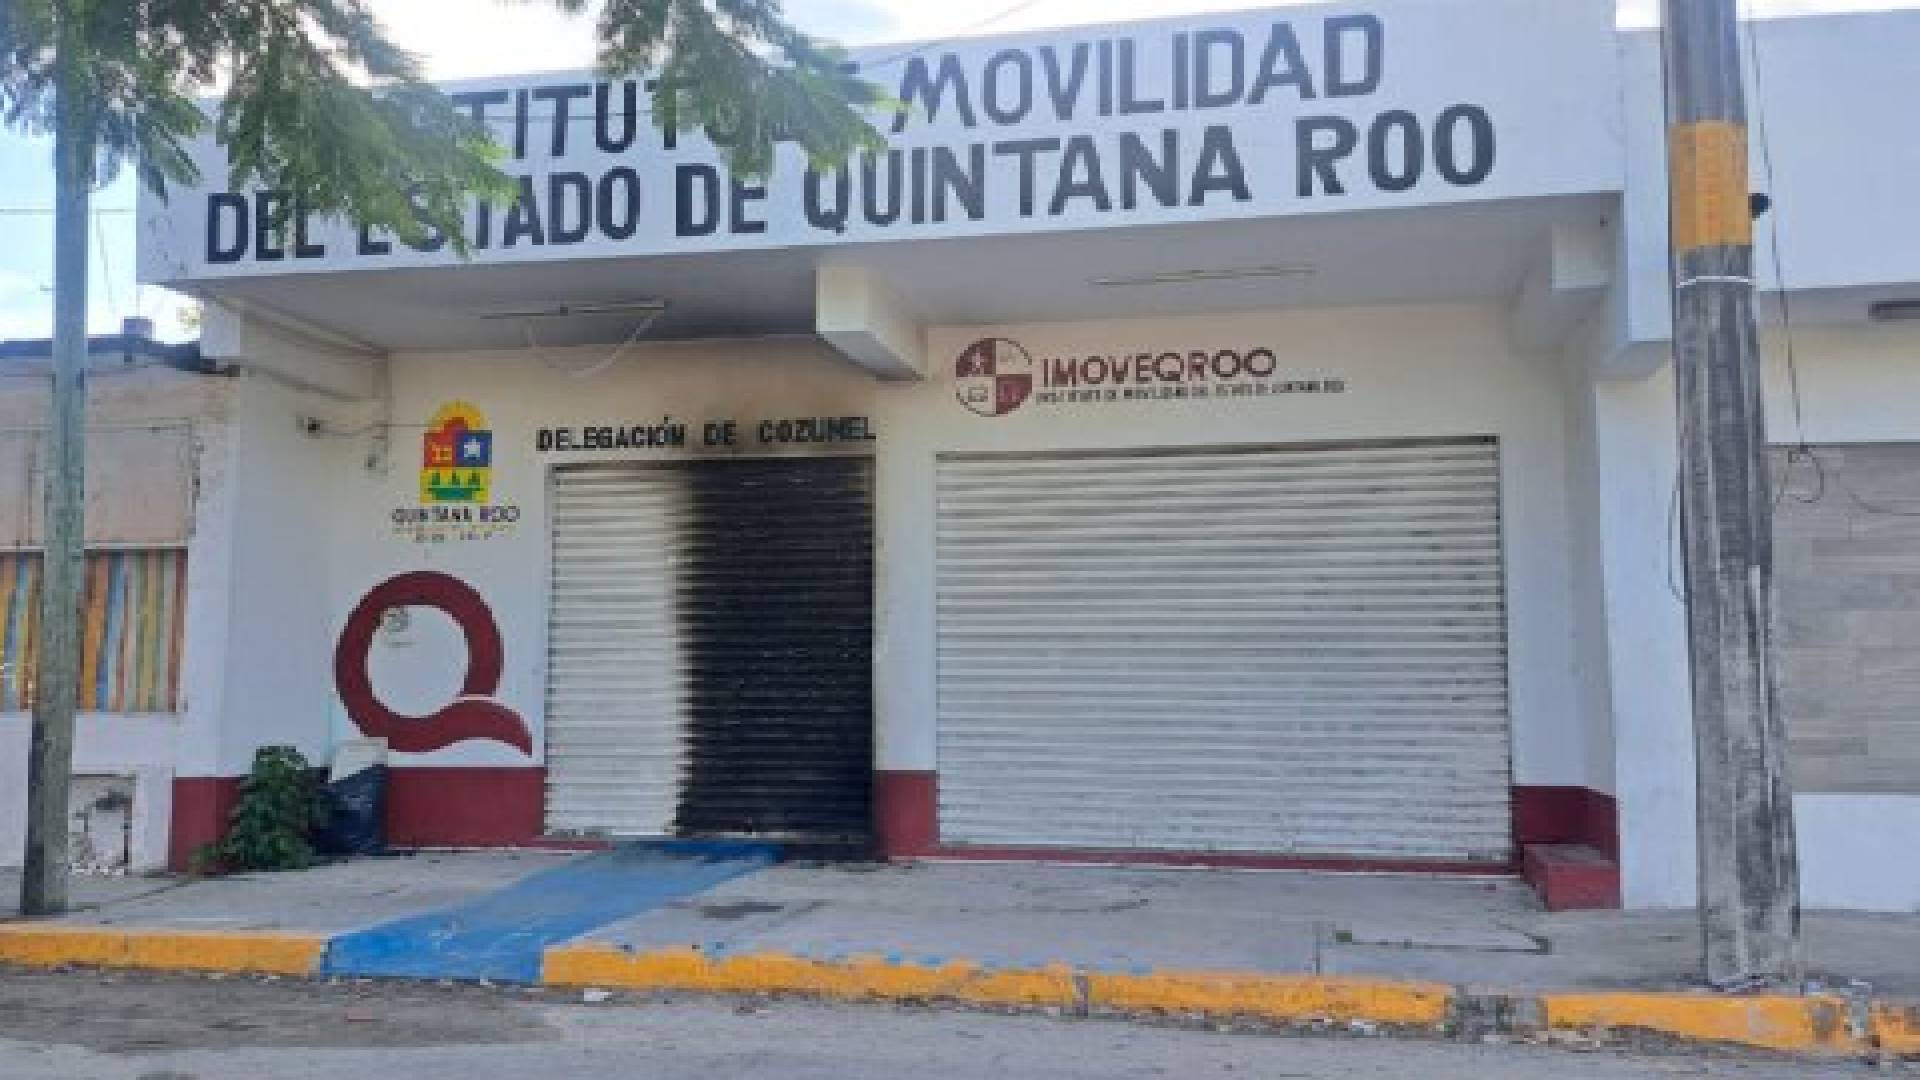 Dependencia del Gobierno de Quintana Roo es atacada: Queman con bombas molotov entrada de oficinas de Imoveqroo en Cozumel.